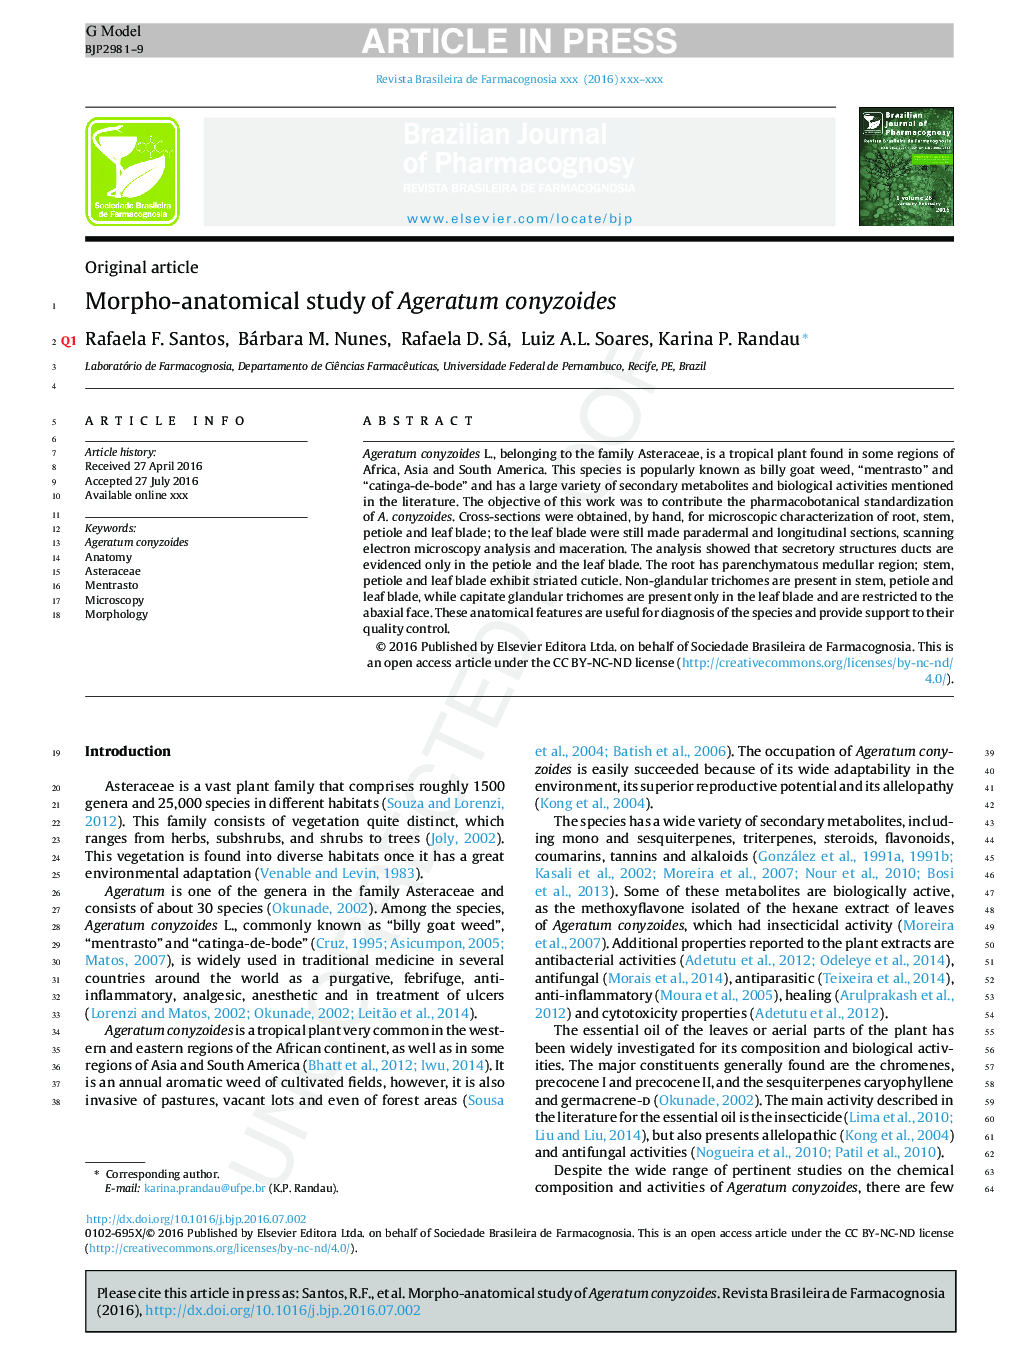 Morpho-anatomical study of Ageratum conyzoides